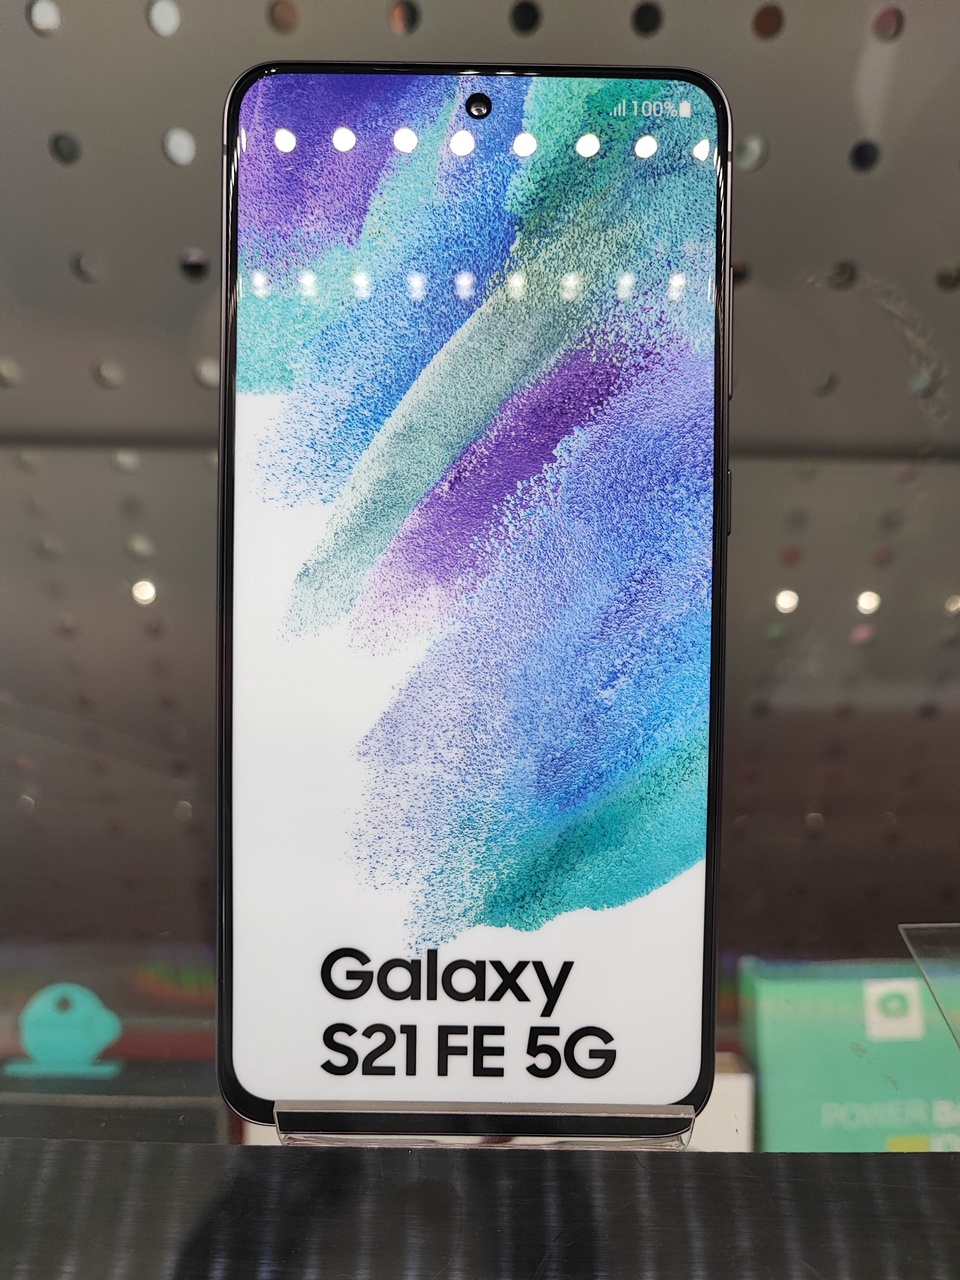 Samsung Galaxy S21FE - 59 990 ₽, заказать онлайн.